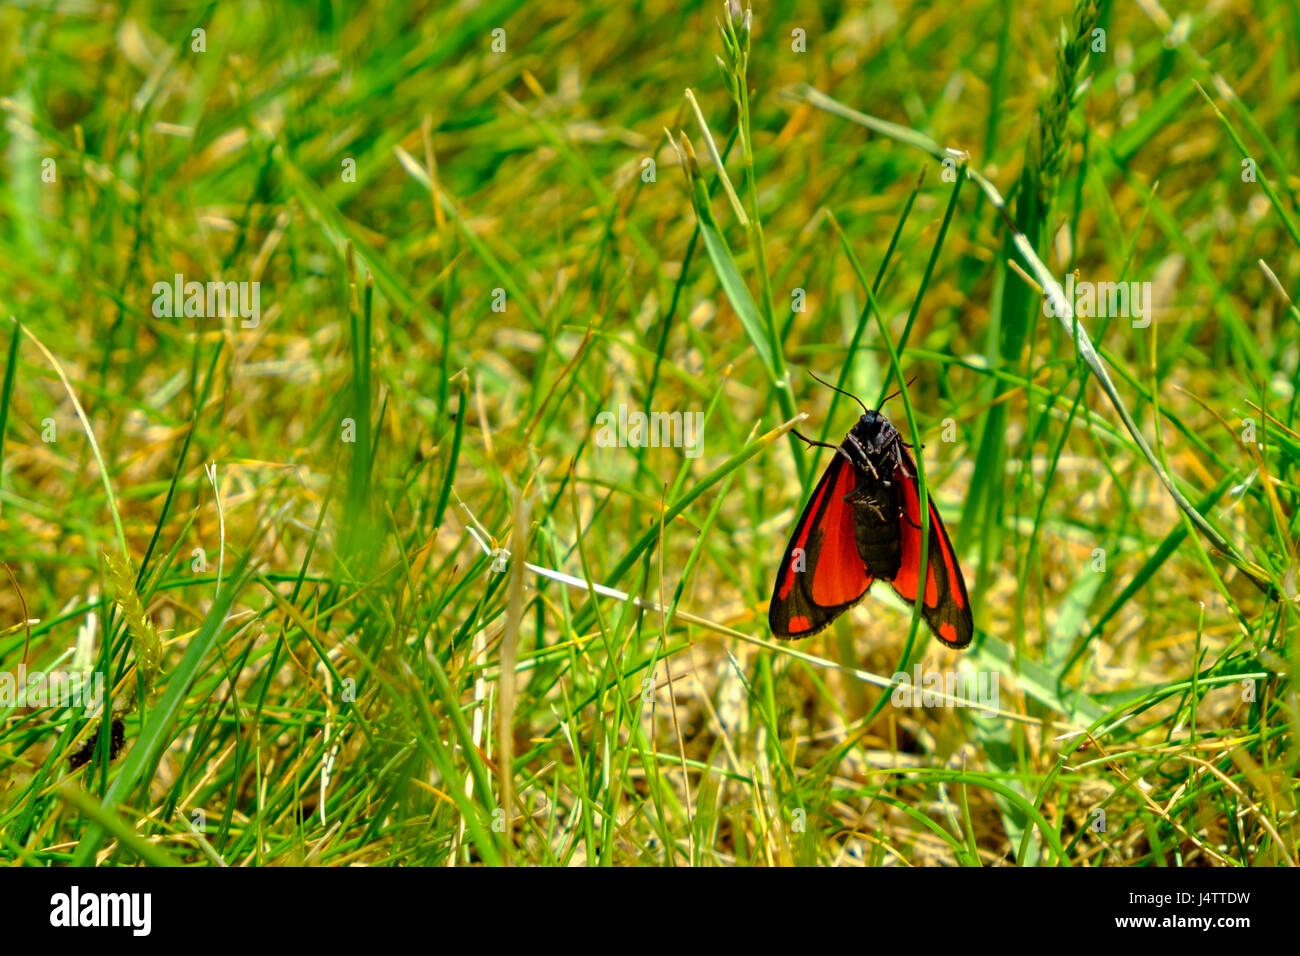 Cinnabar moth resting on blades of grass. Stock Photo